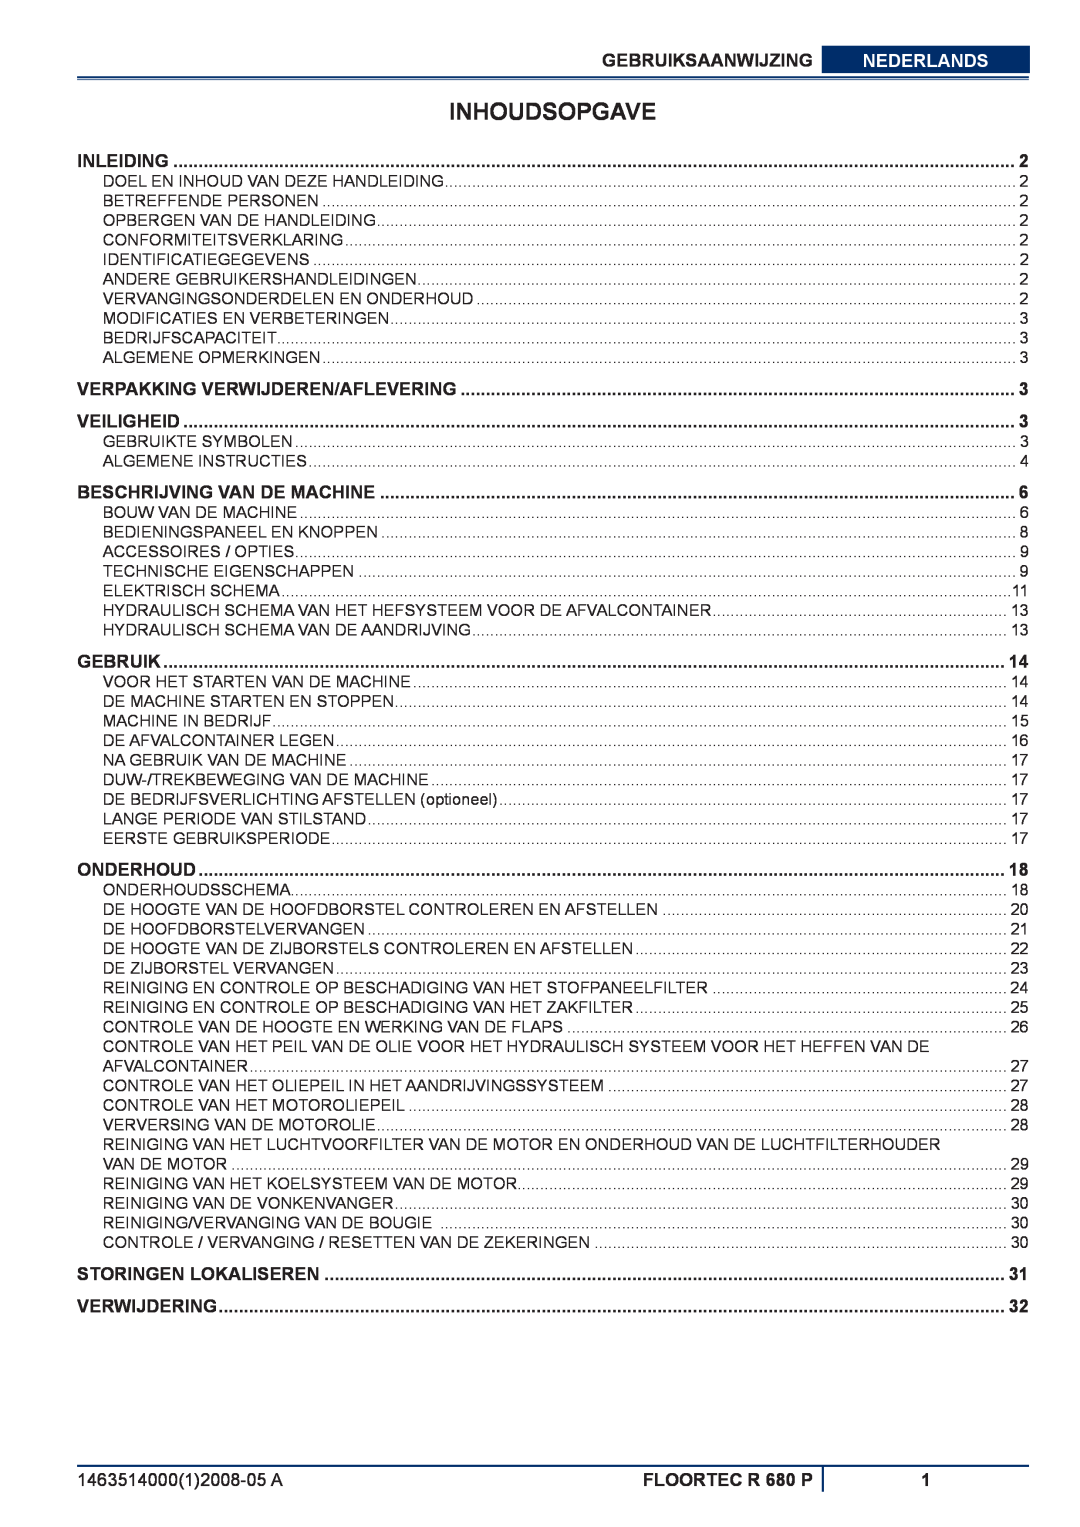 Nilfisk-ALTO Inhoudsopgave, Gebruiksaanwijzing, Nederlands, FLOORTEC R 680 P, Inleiding, Veiligheid, Onderhoud 